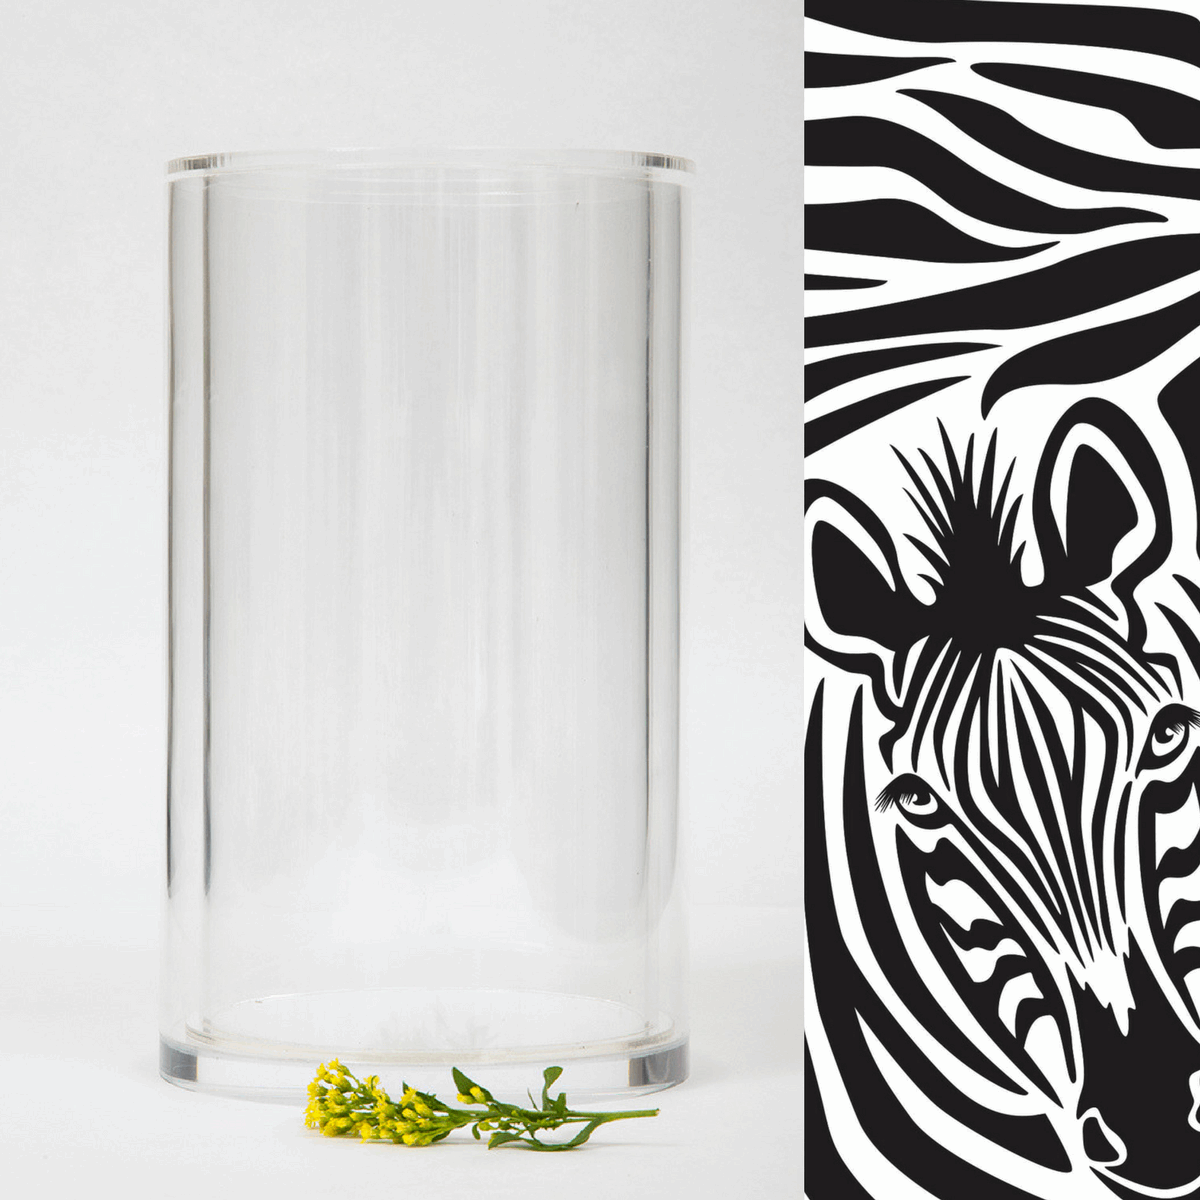 The Vase + Zebra Dailie Insert - TingeDaily